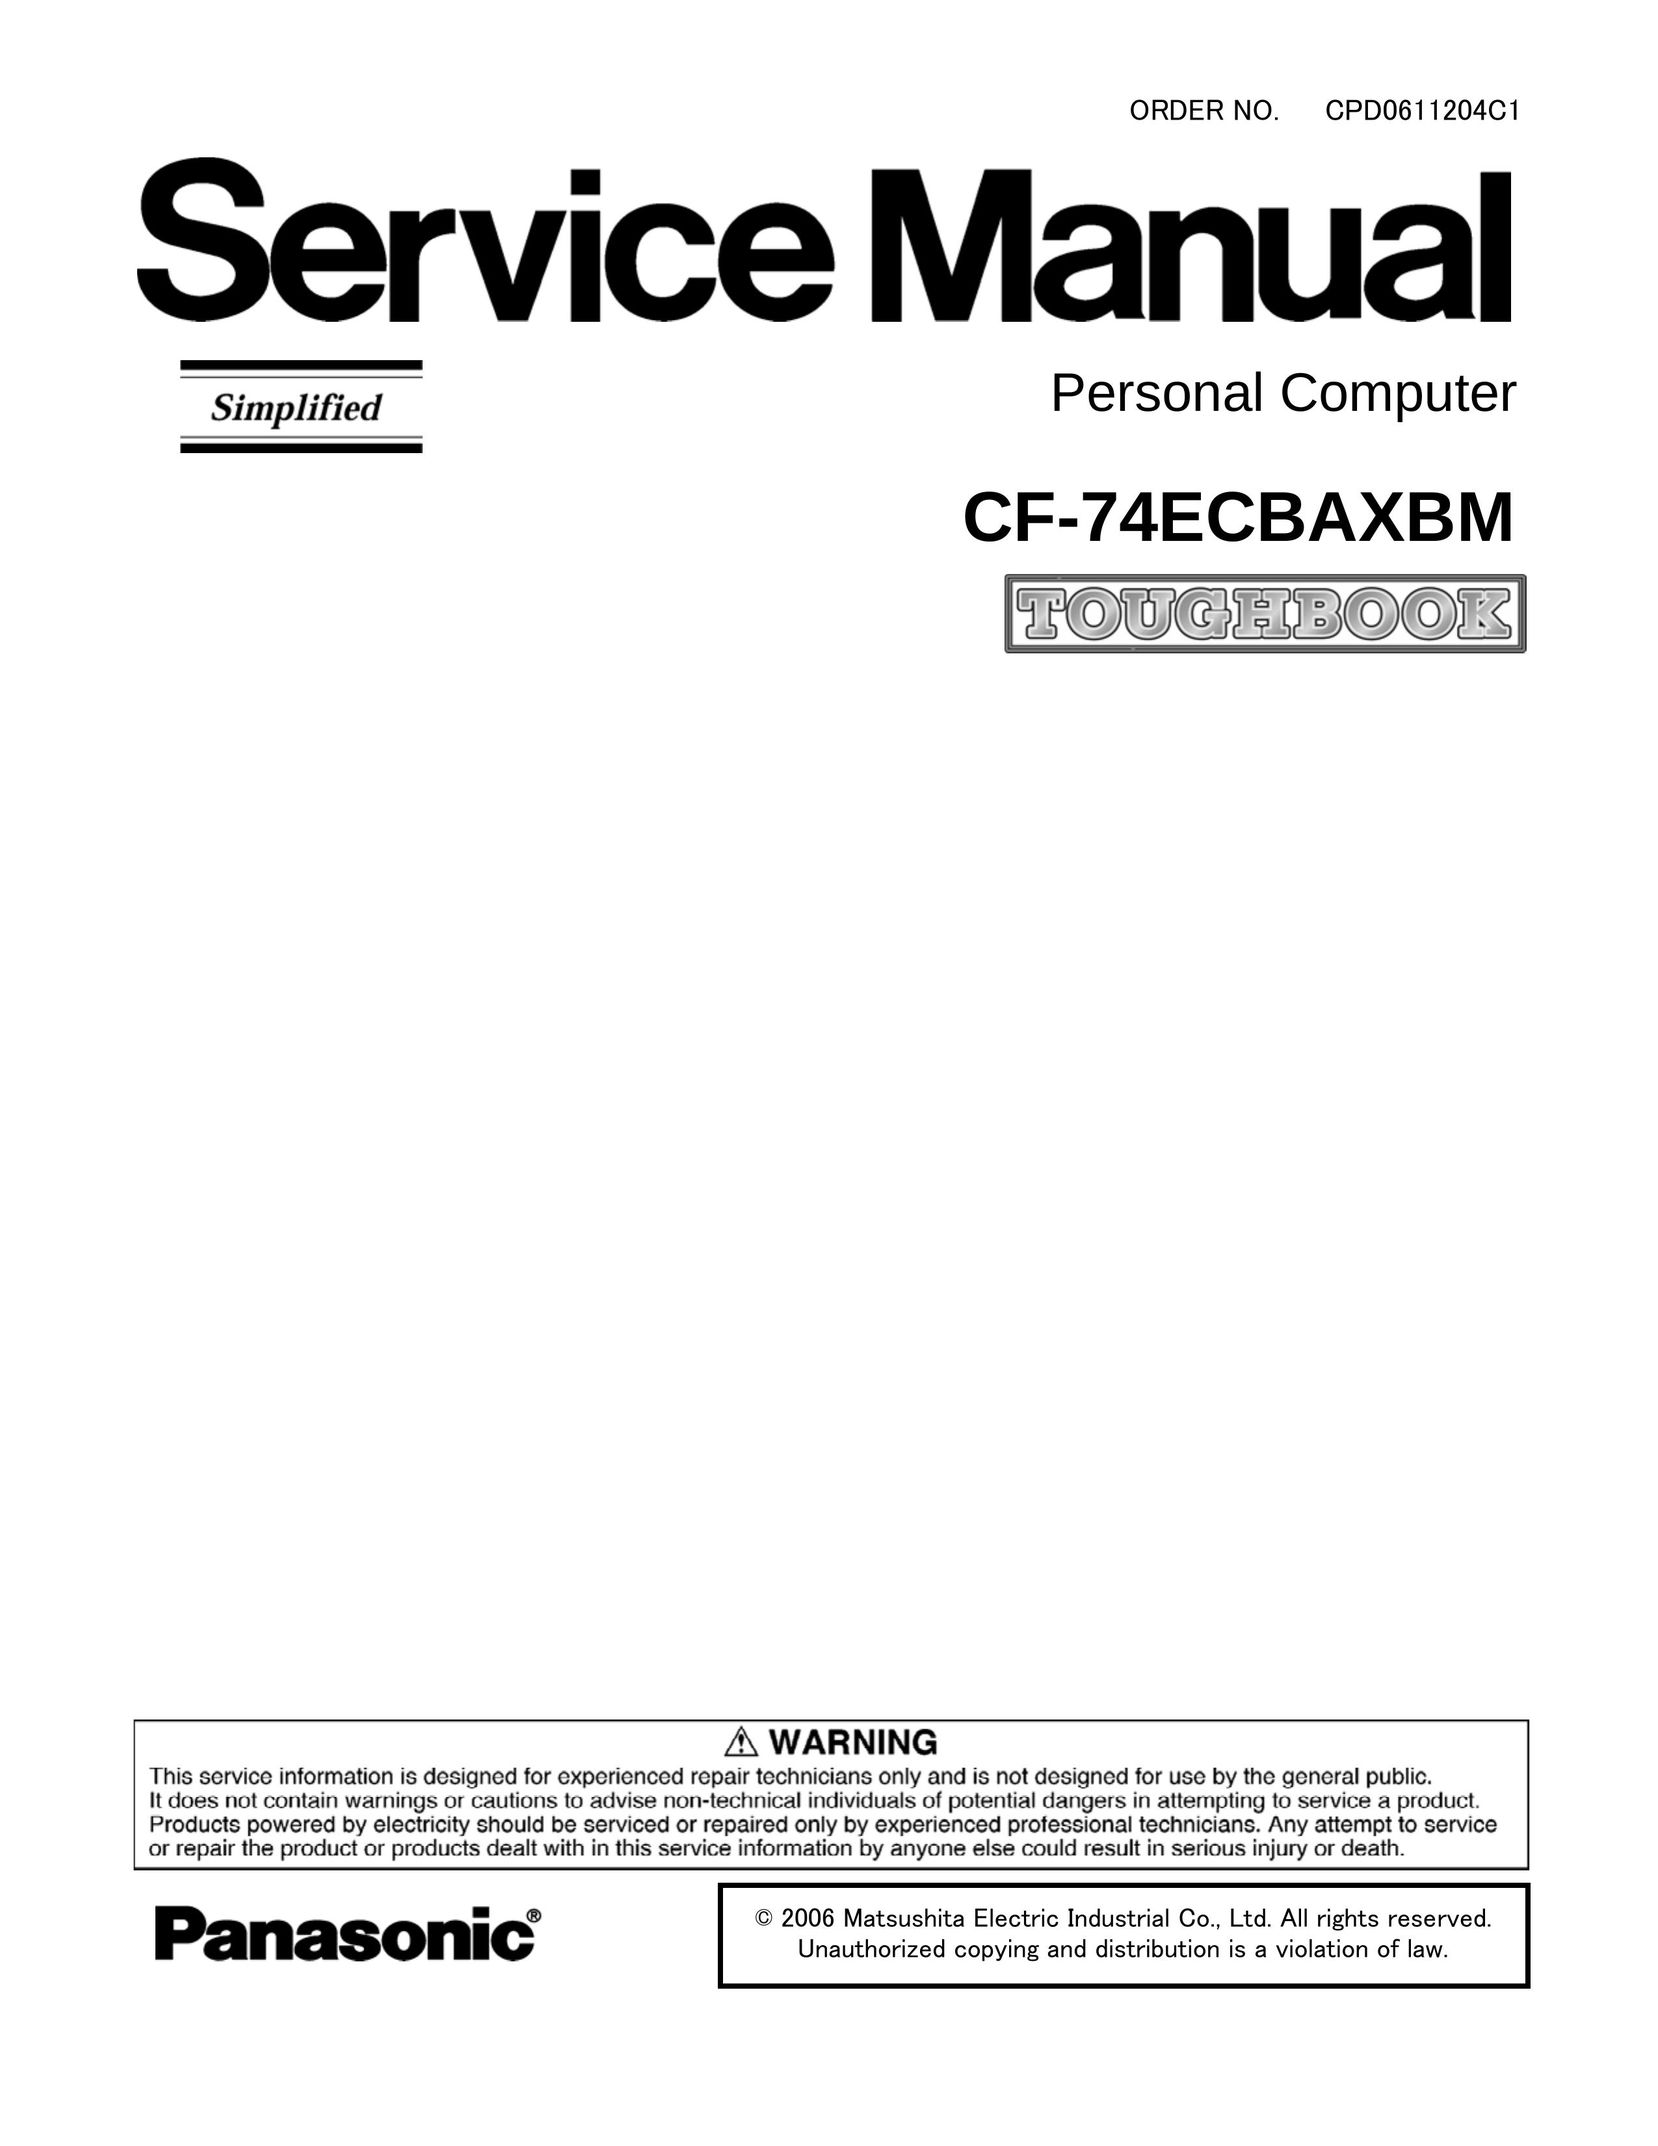 Matsushita CF-74ECBAXBM Personal Computer User Manual